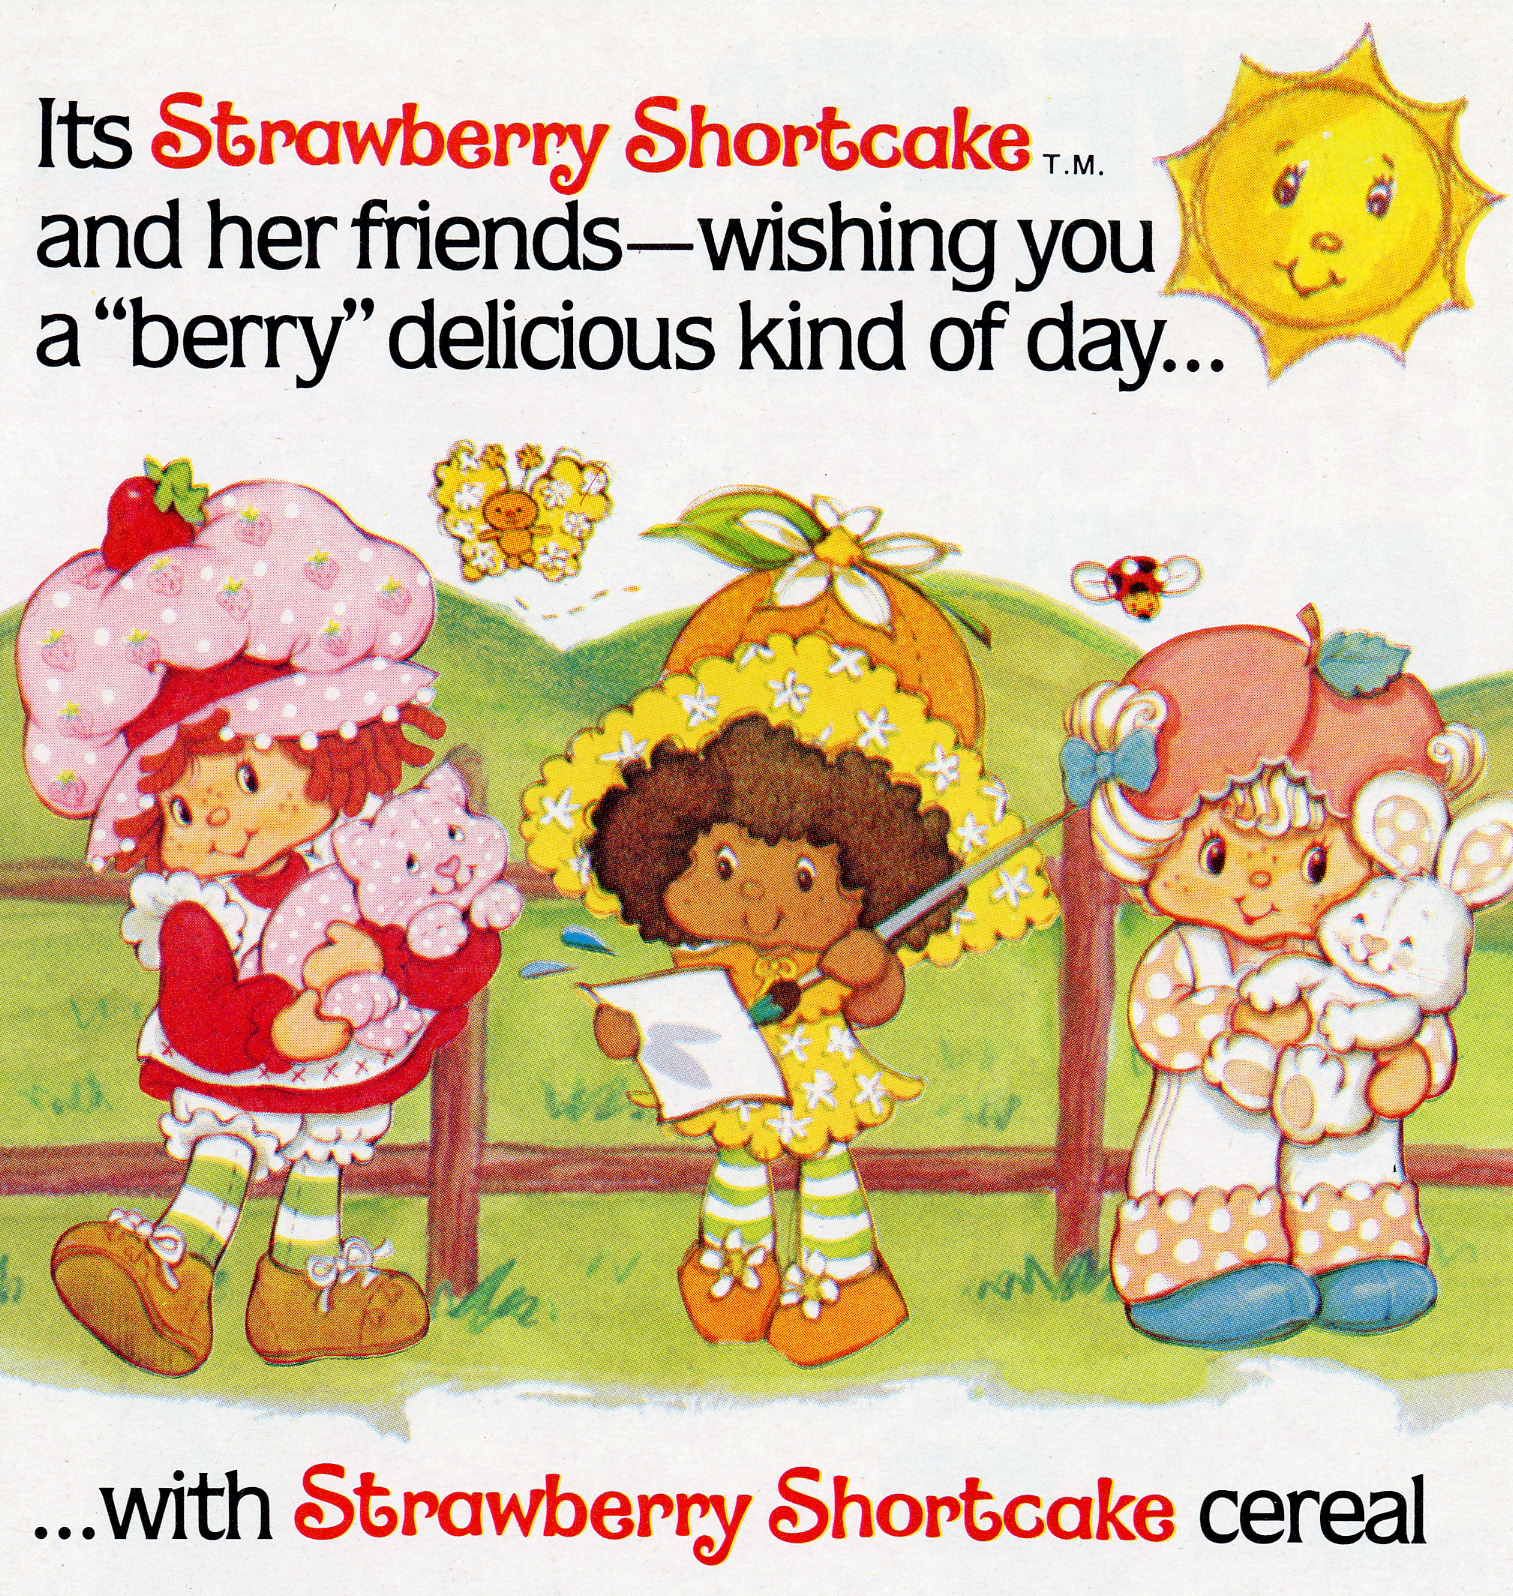 1981 Strawberry Shortcake cereal advertisement